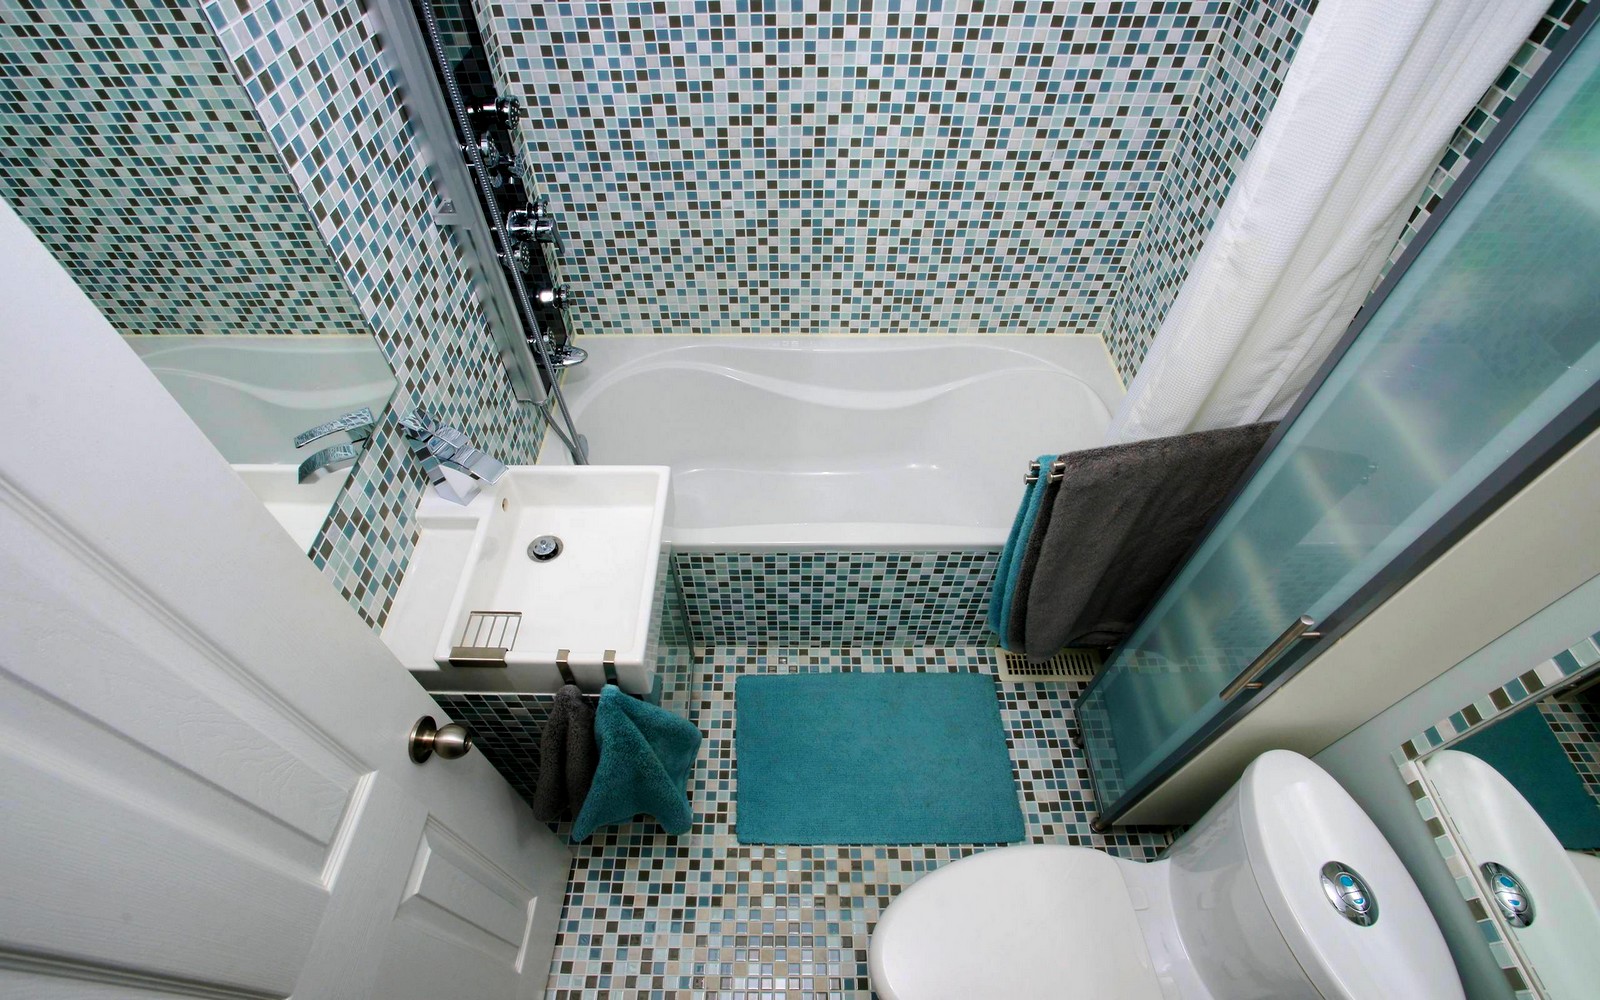 Ванная комната сверху, дизайн мозаика